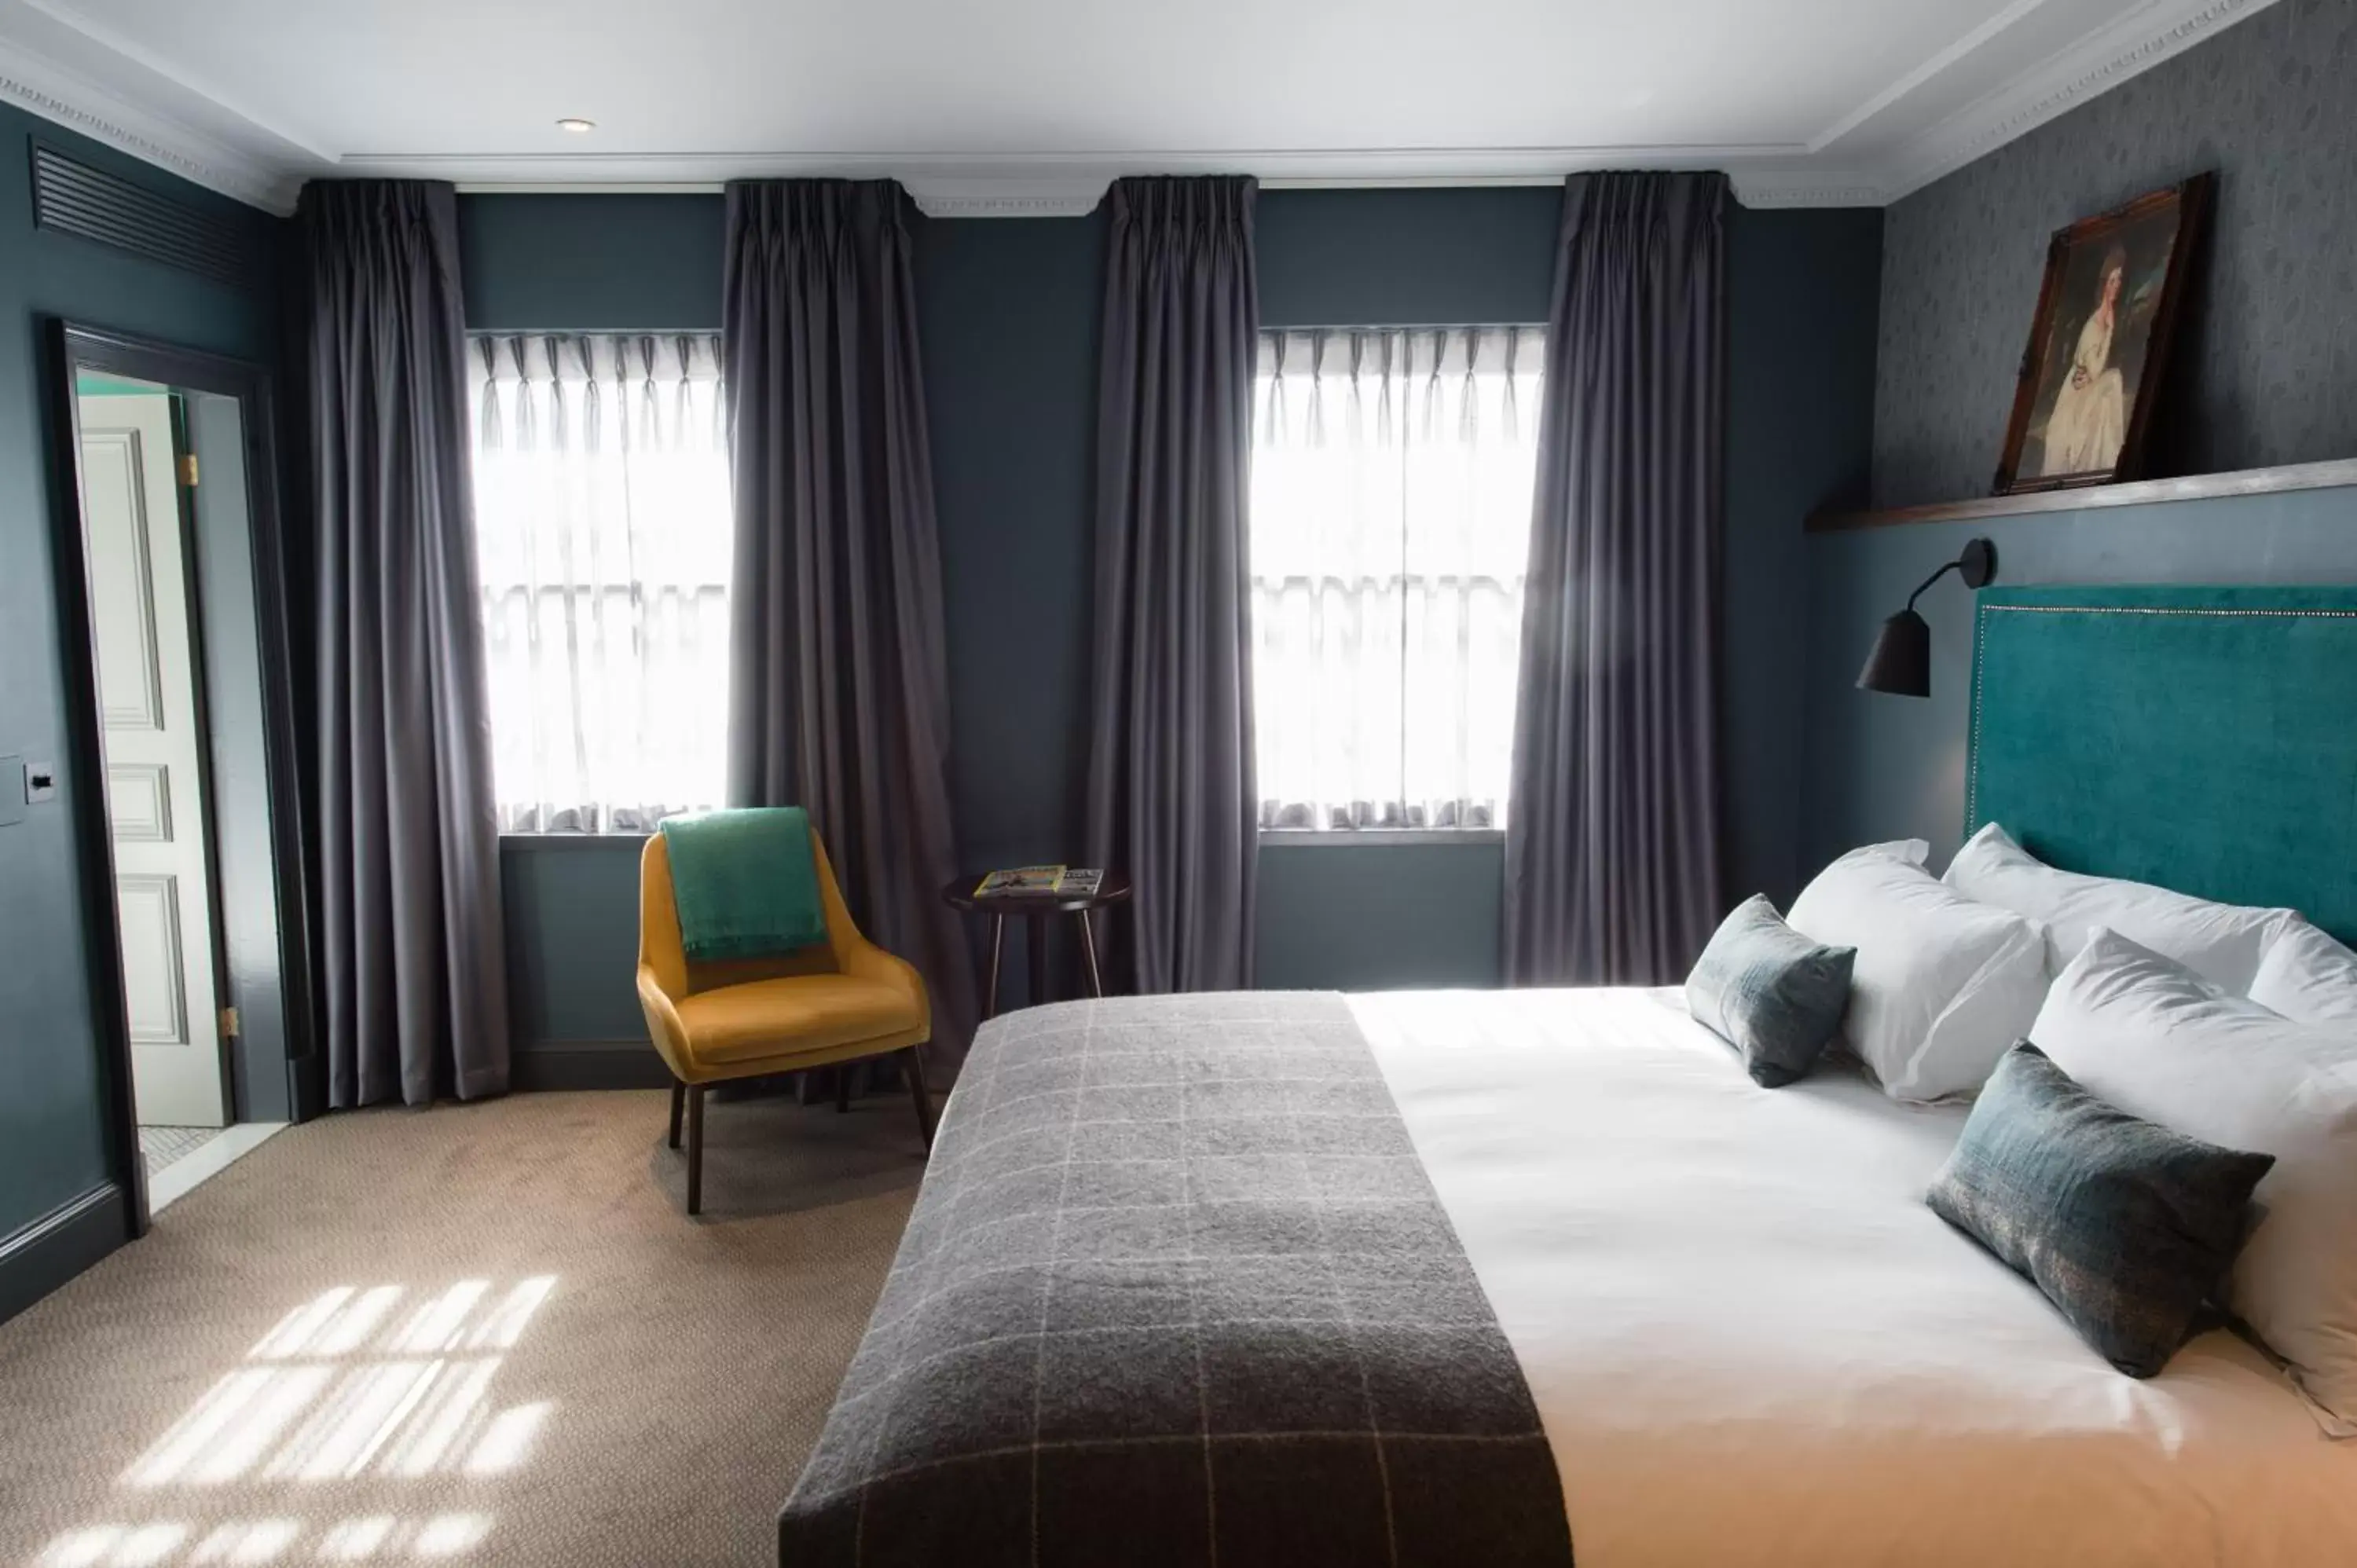 Bedroom in Avon Gorge by Hotel du Vin